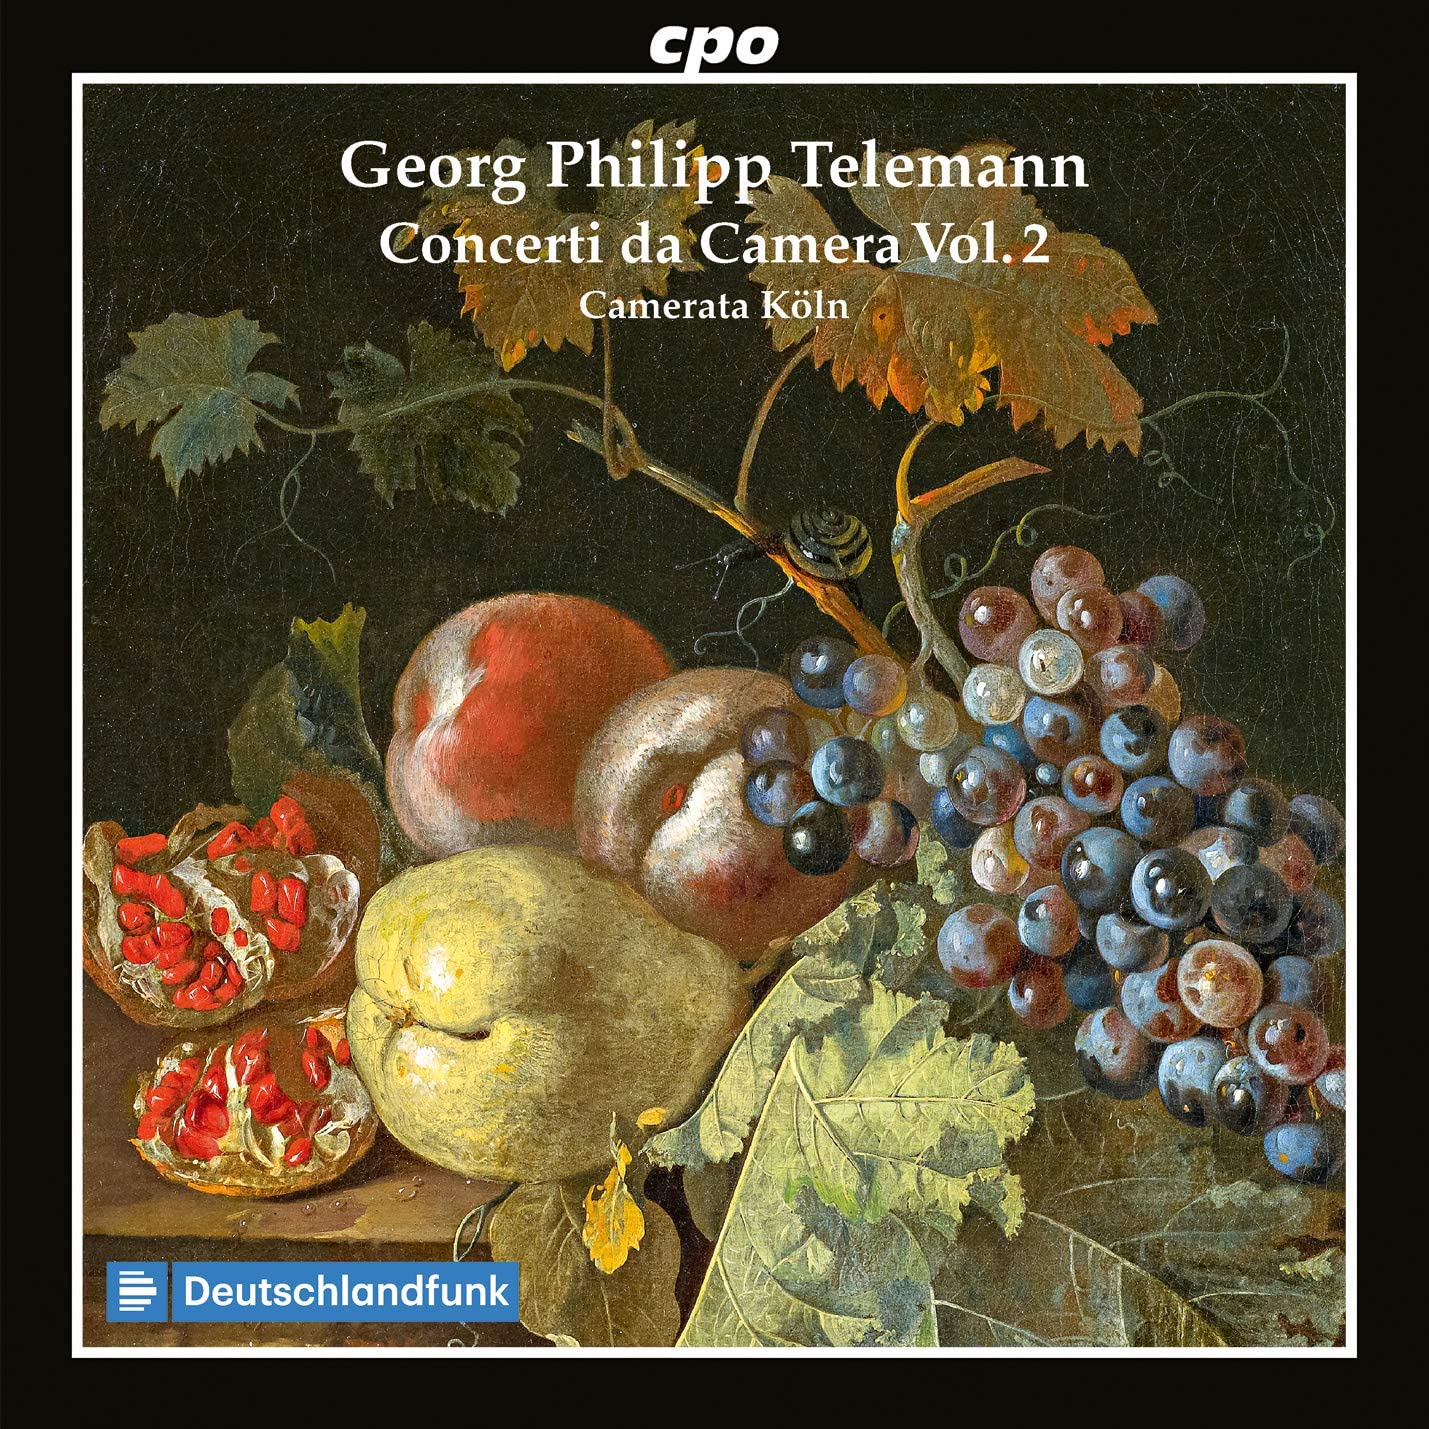 Camerata Köln play Telemann Concerti da camera vol. 2